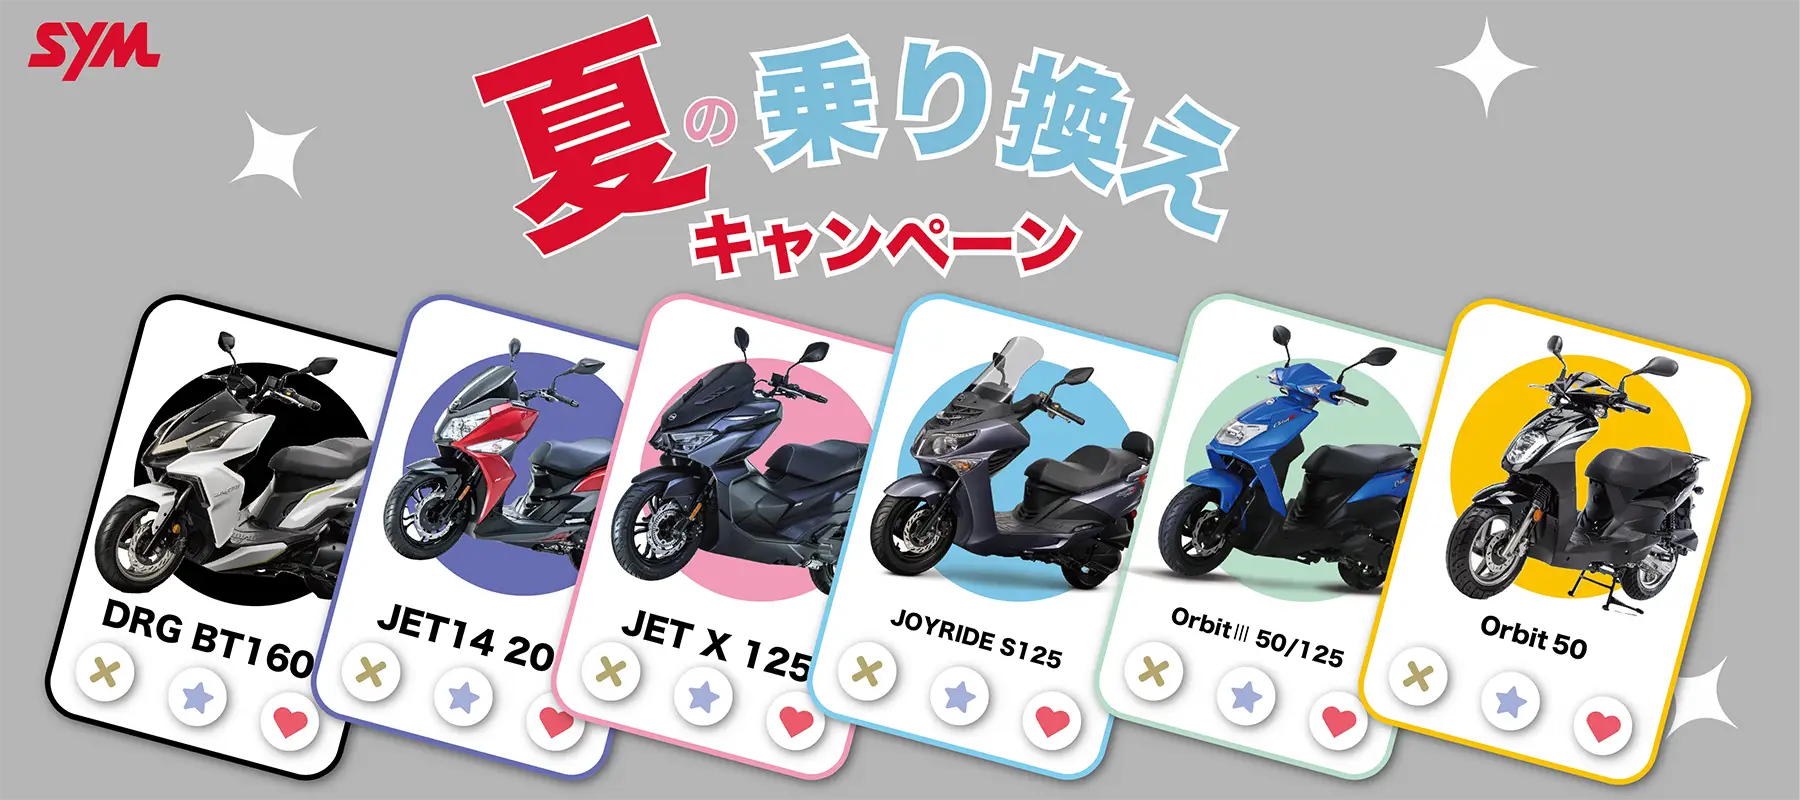 SYM JPN official site   SYM日本輸入販売元 MOTORISTS